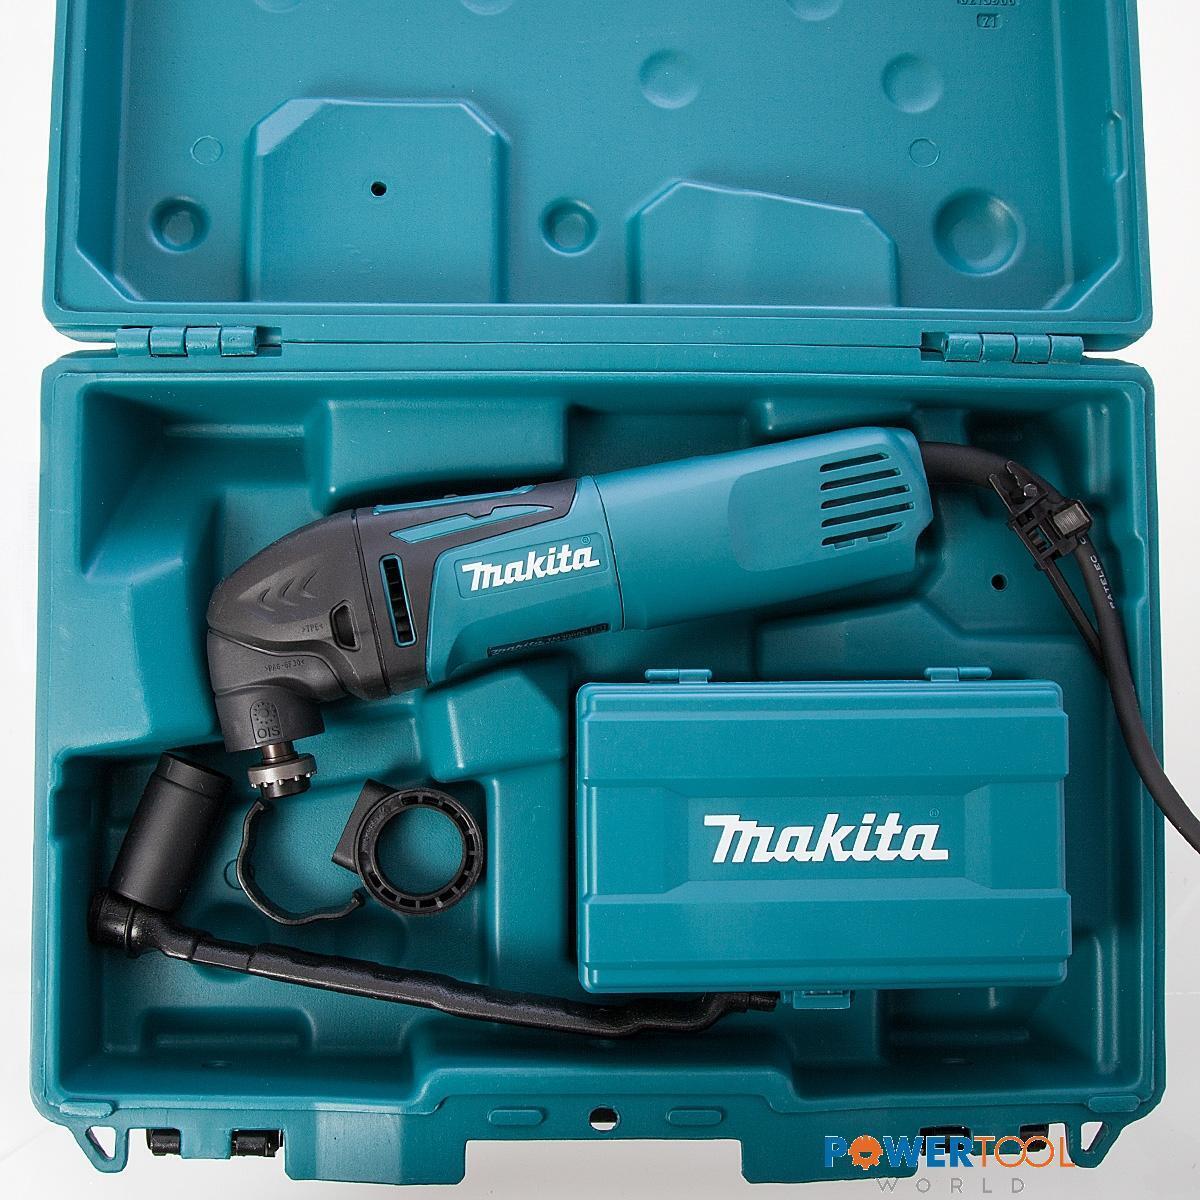 Makita TM3000CX4/1 Multi-Tool Kit With Accessories & Case 110V/320W